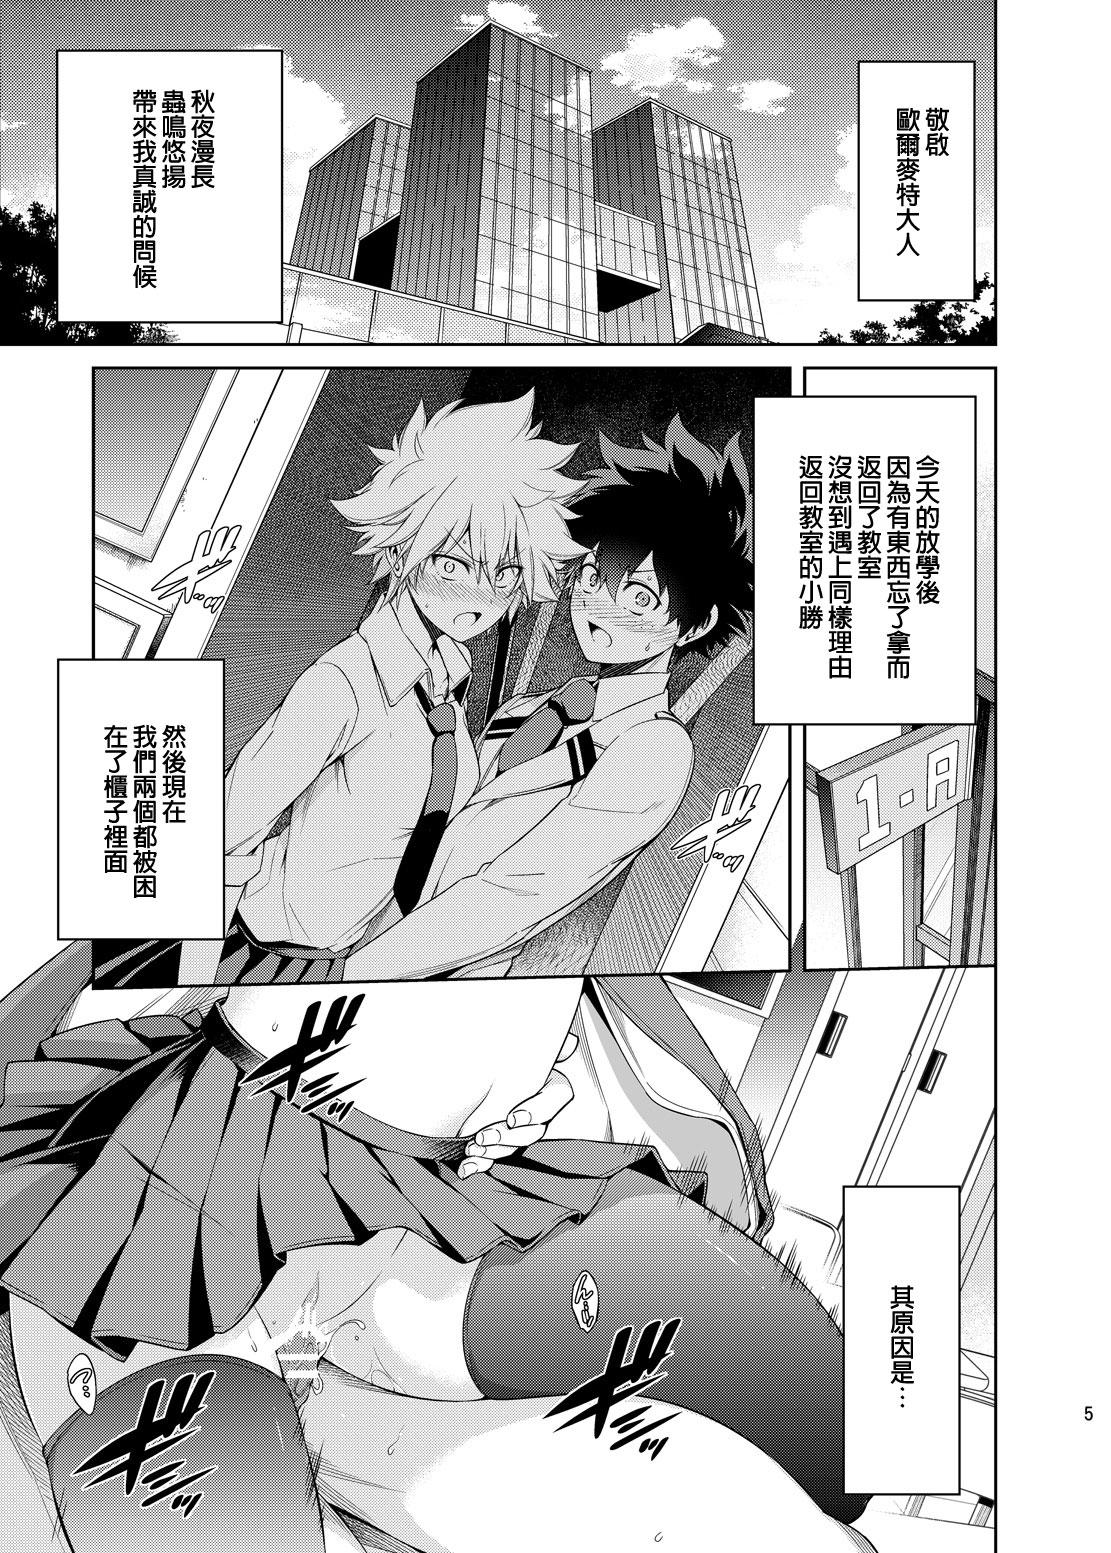 Lesbians Boku no Iinazuke to Osananajimi ga Shuraba Sugiru - My hero academia Hot Milf - Page 5